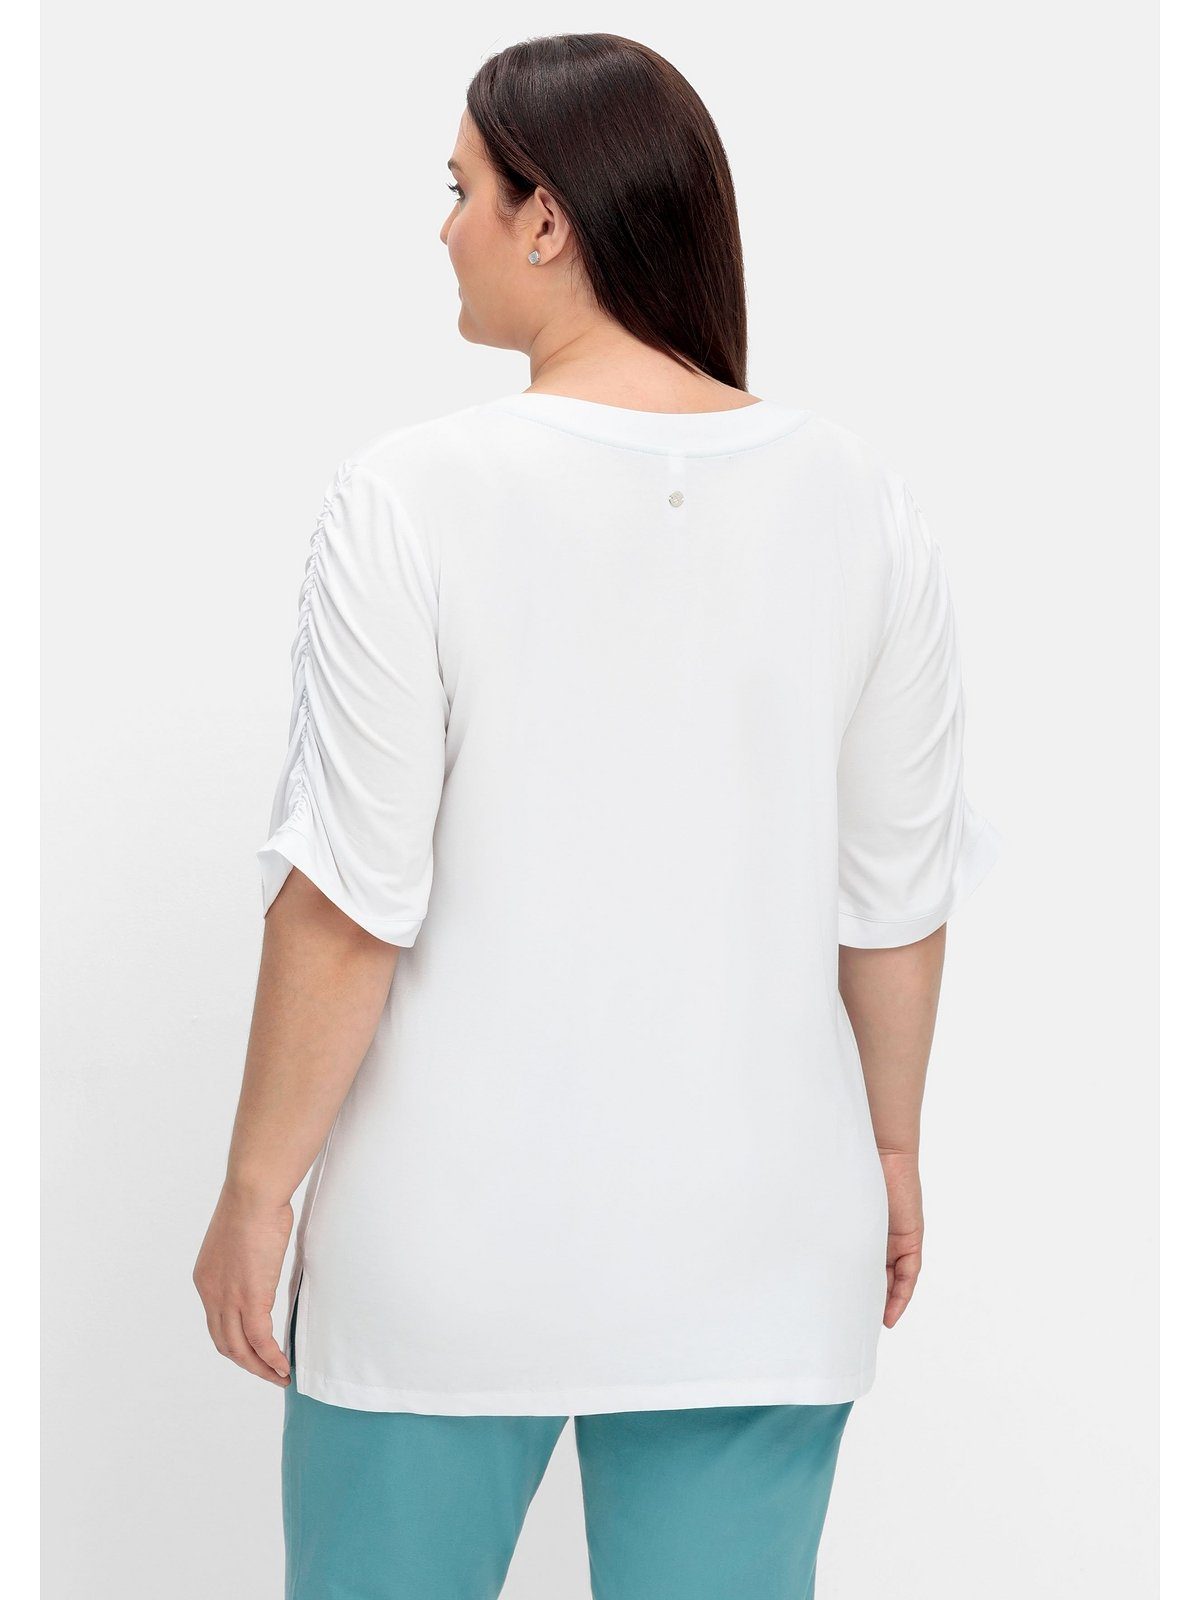 Sheego Longshirt Große Größen mit Blütenprint am Saum | V-Shirts